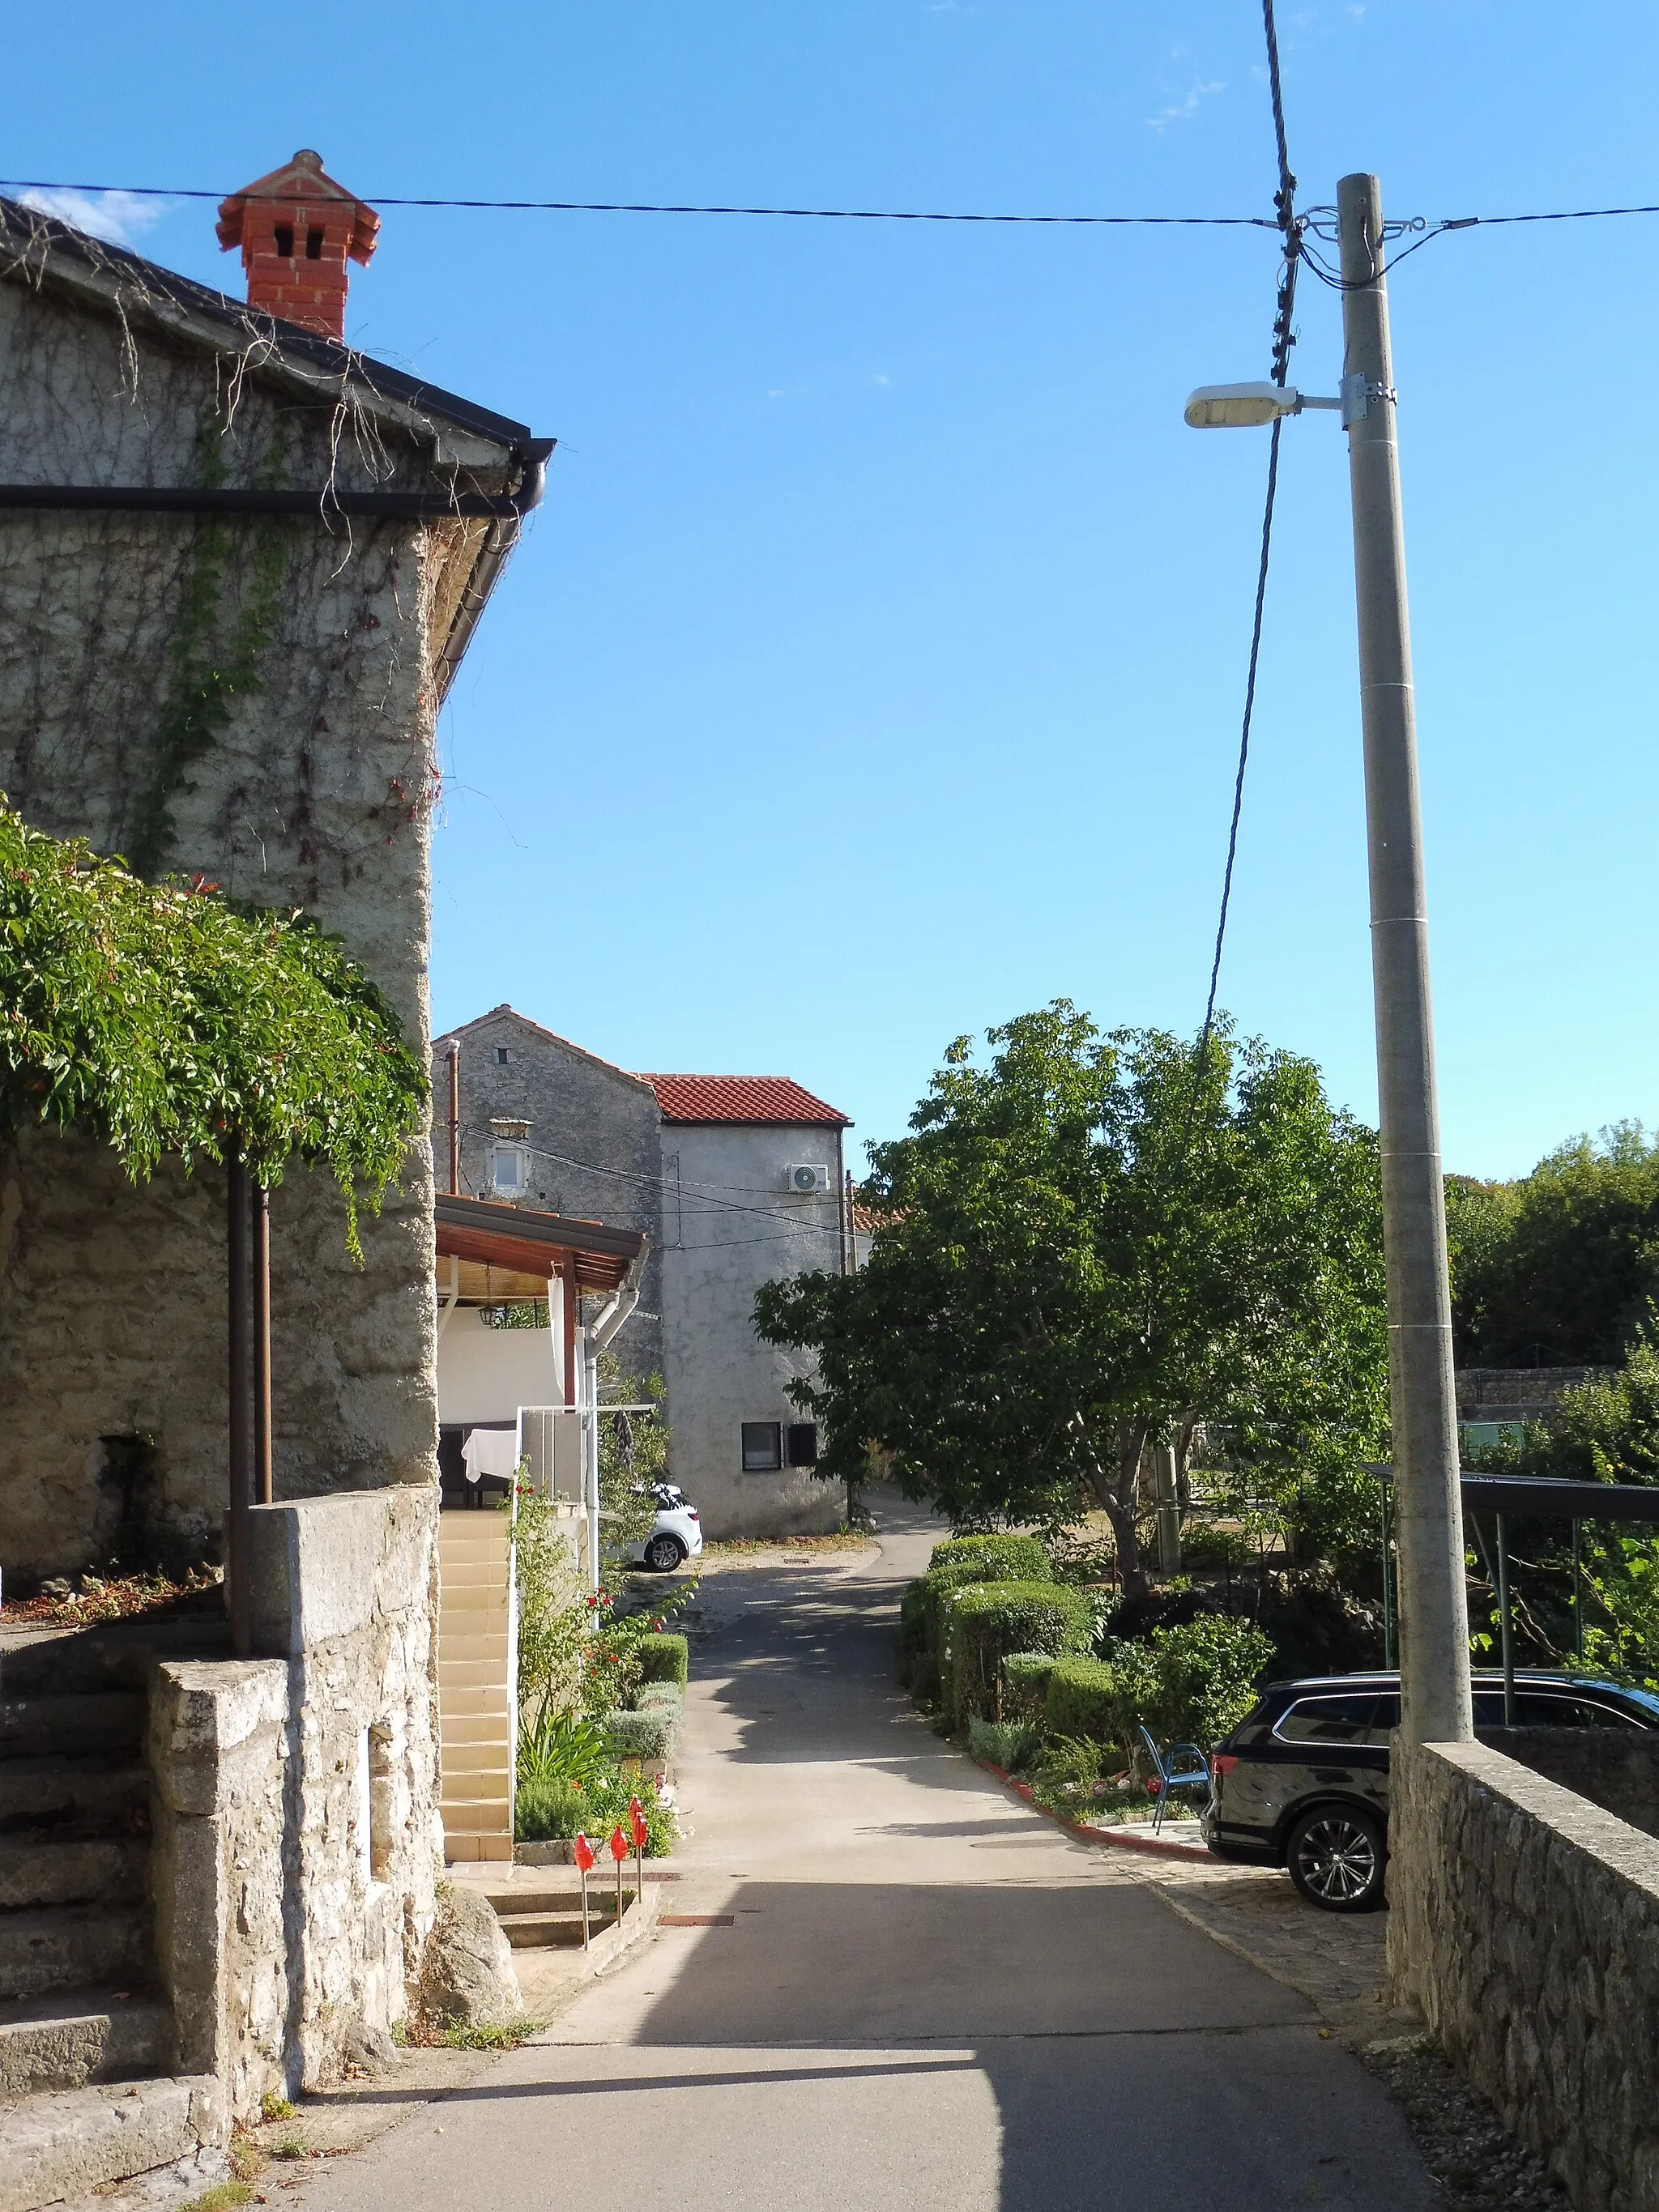 Photo showing: The village of Lakmartin on the Krk island, Croatia